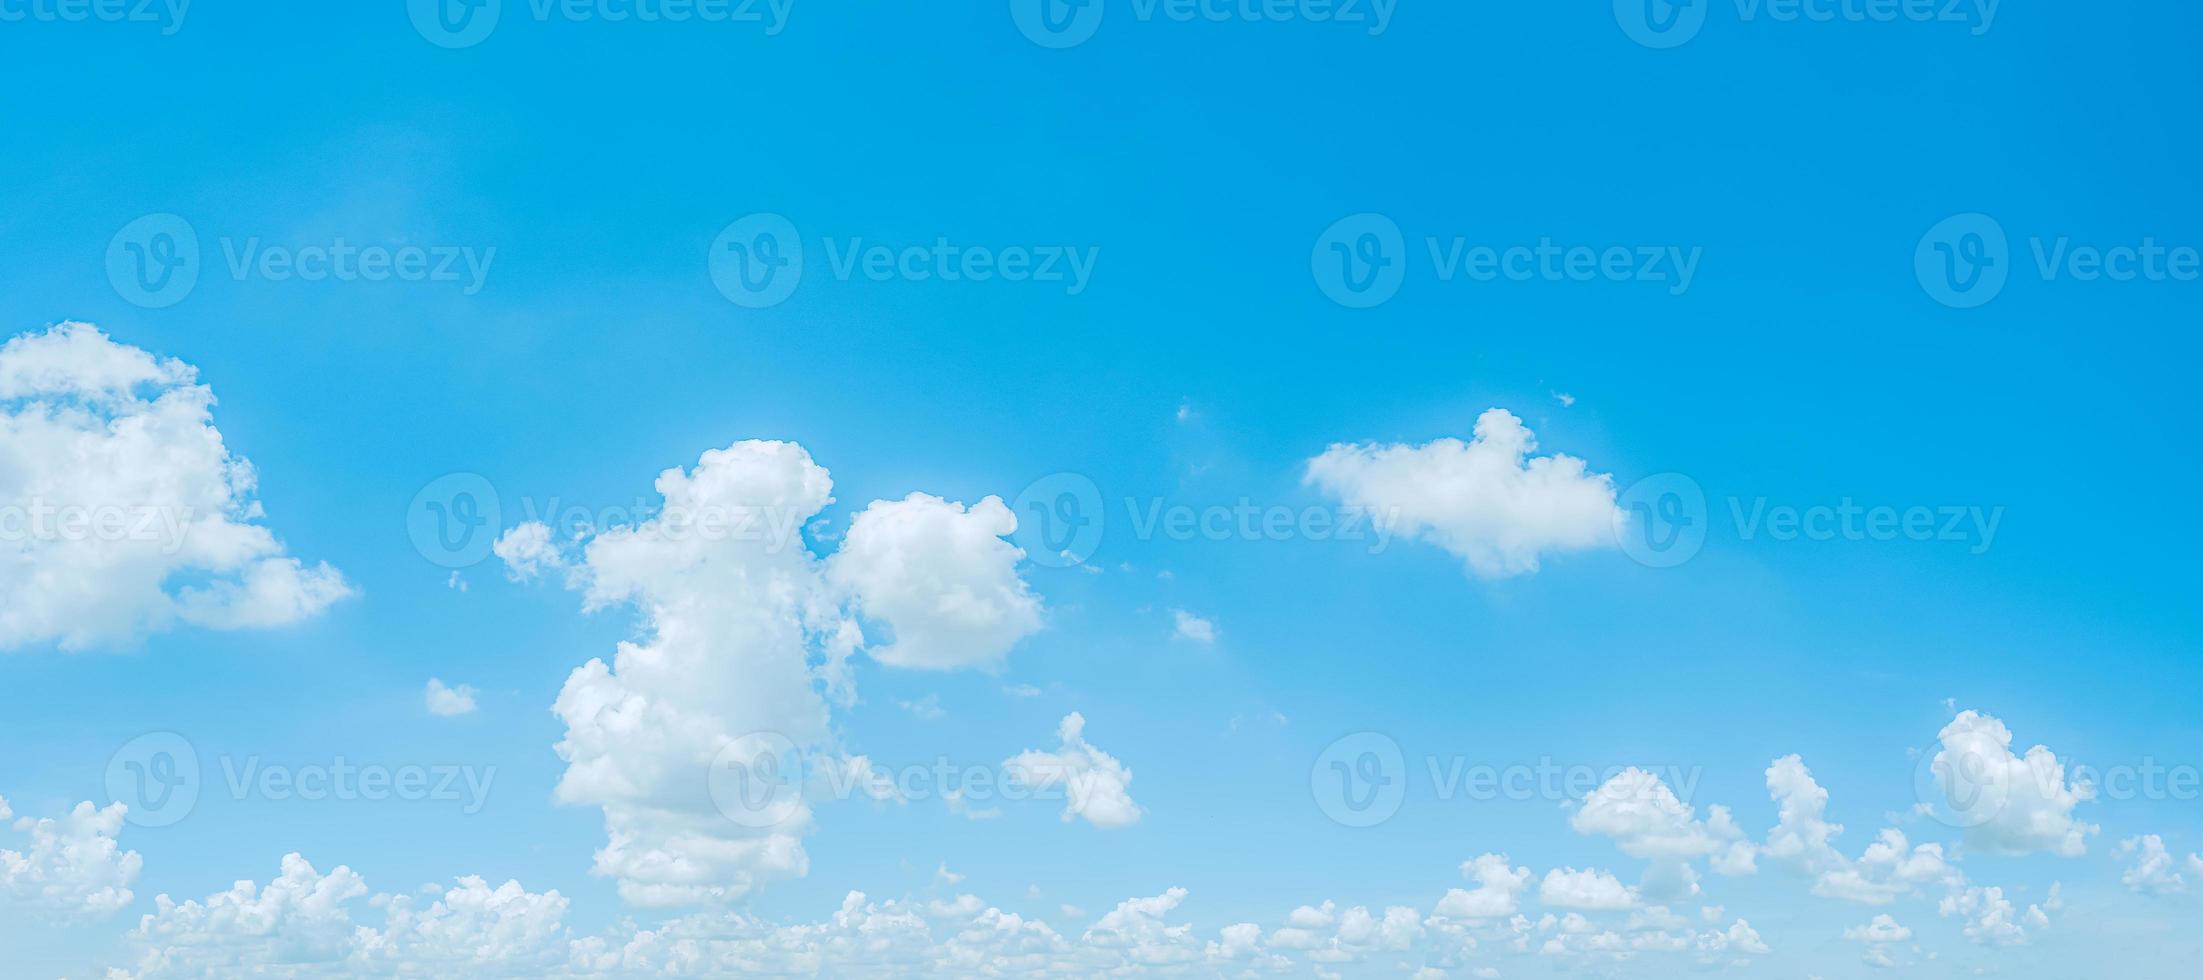 prachtige panorama blauwe lucht en wolken met daglicht natuurlijke achtergrond. foto